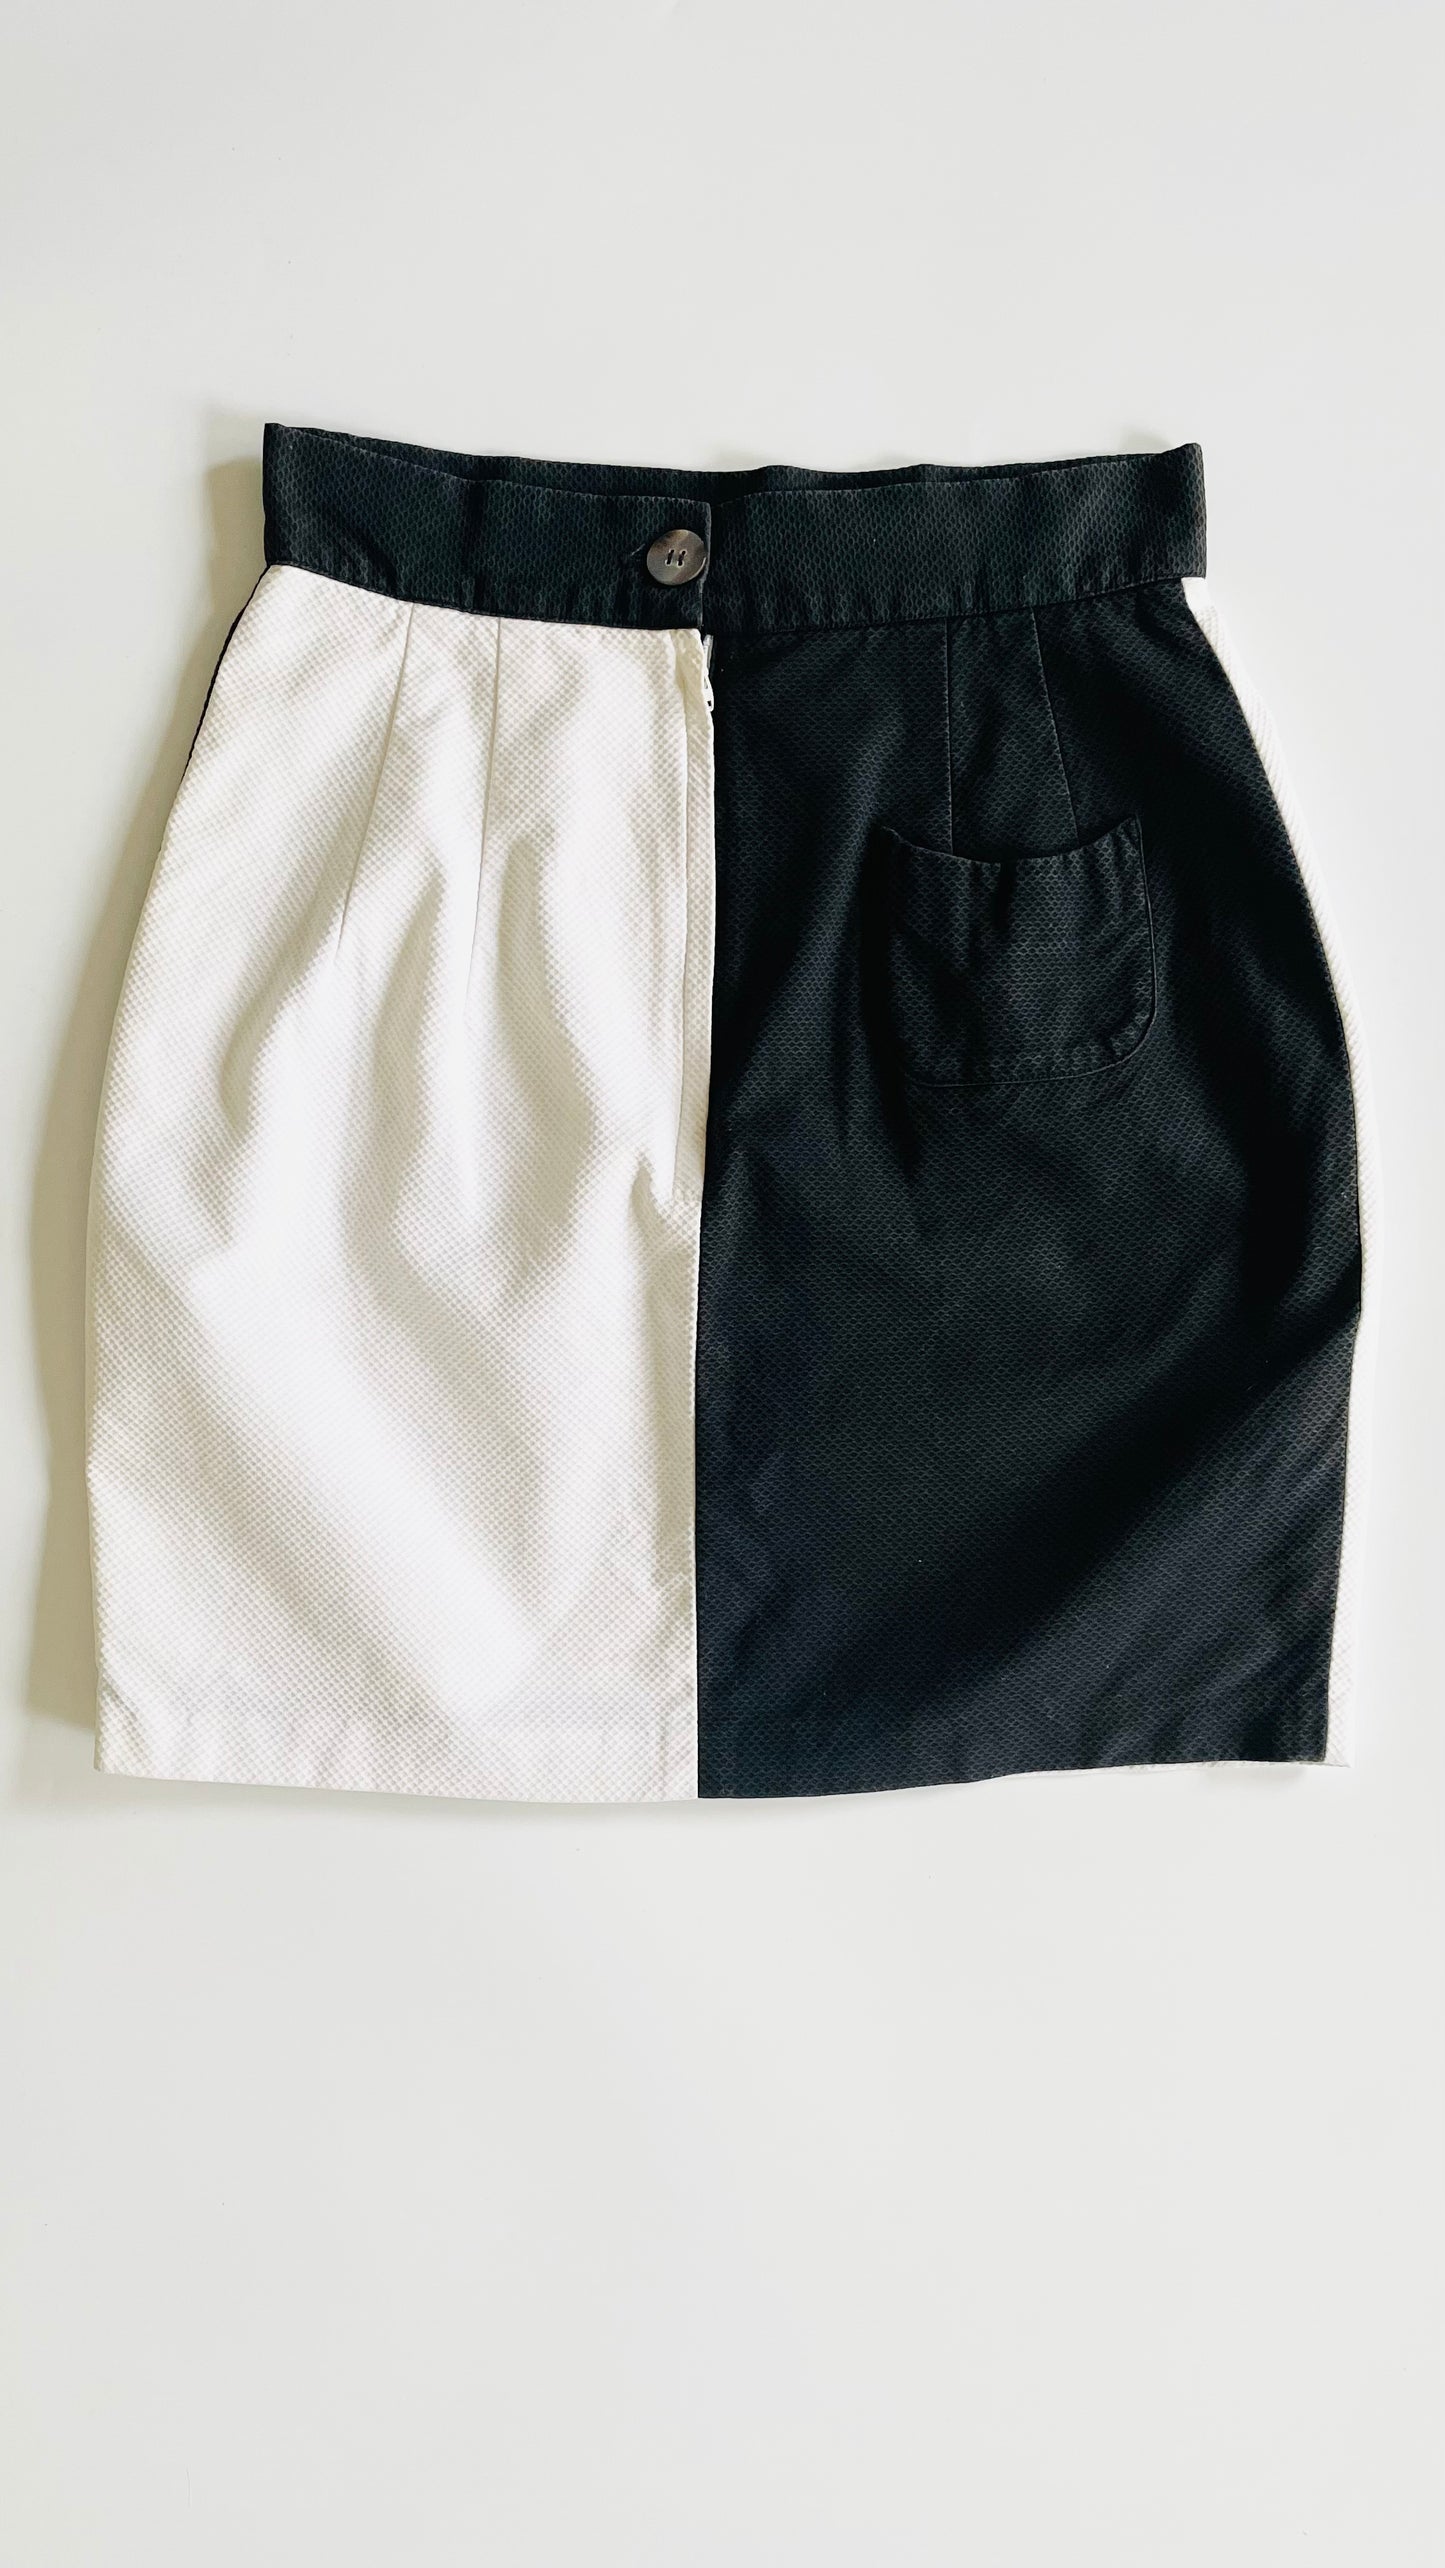 Vintage 90s black & white color block mini skirt - Size 10